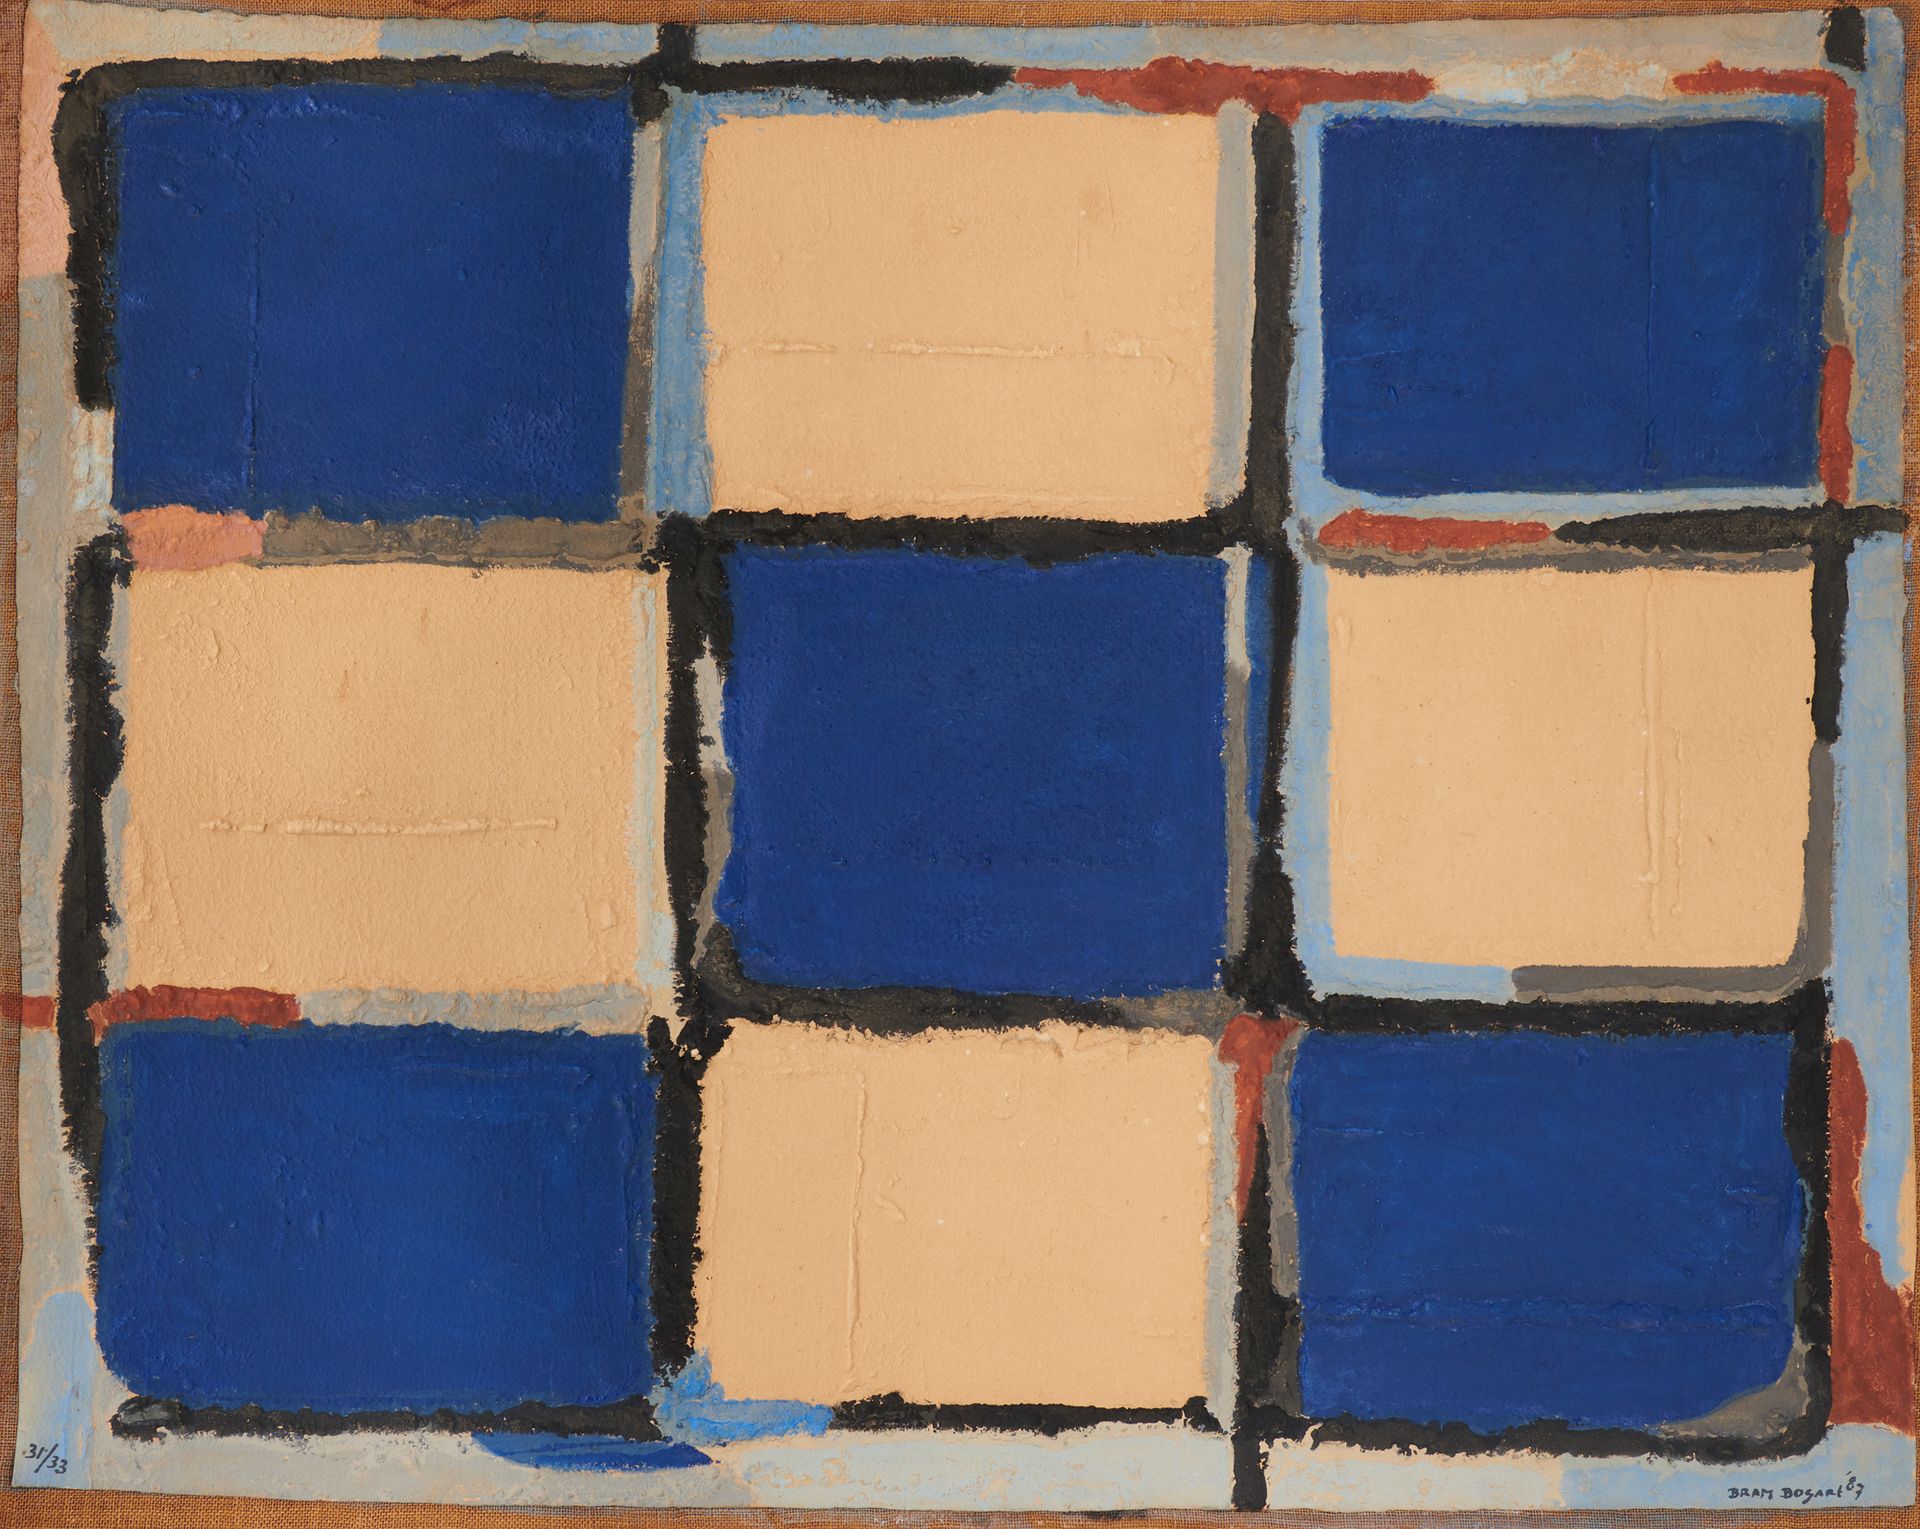 Bram BOGART 1921-2012 构成，87

纸上水墨画，铺在画布上，右下方有签名和年代，左下方有编号 31/33
117 x 146 厘米